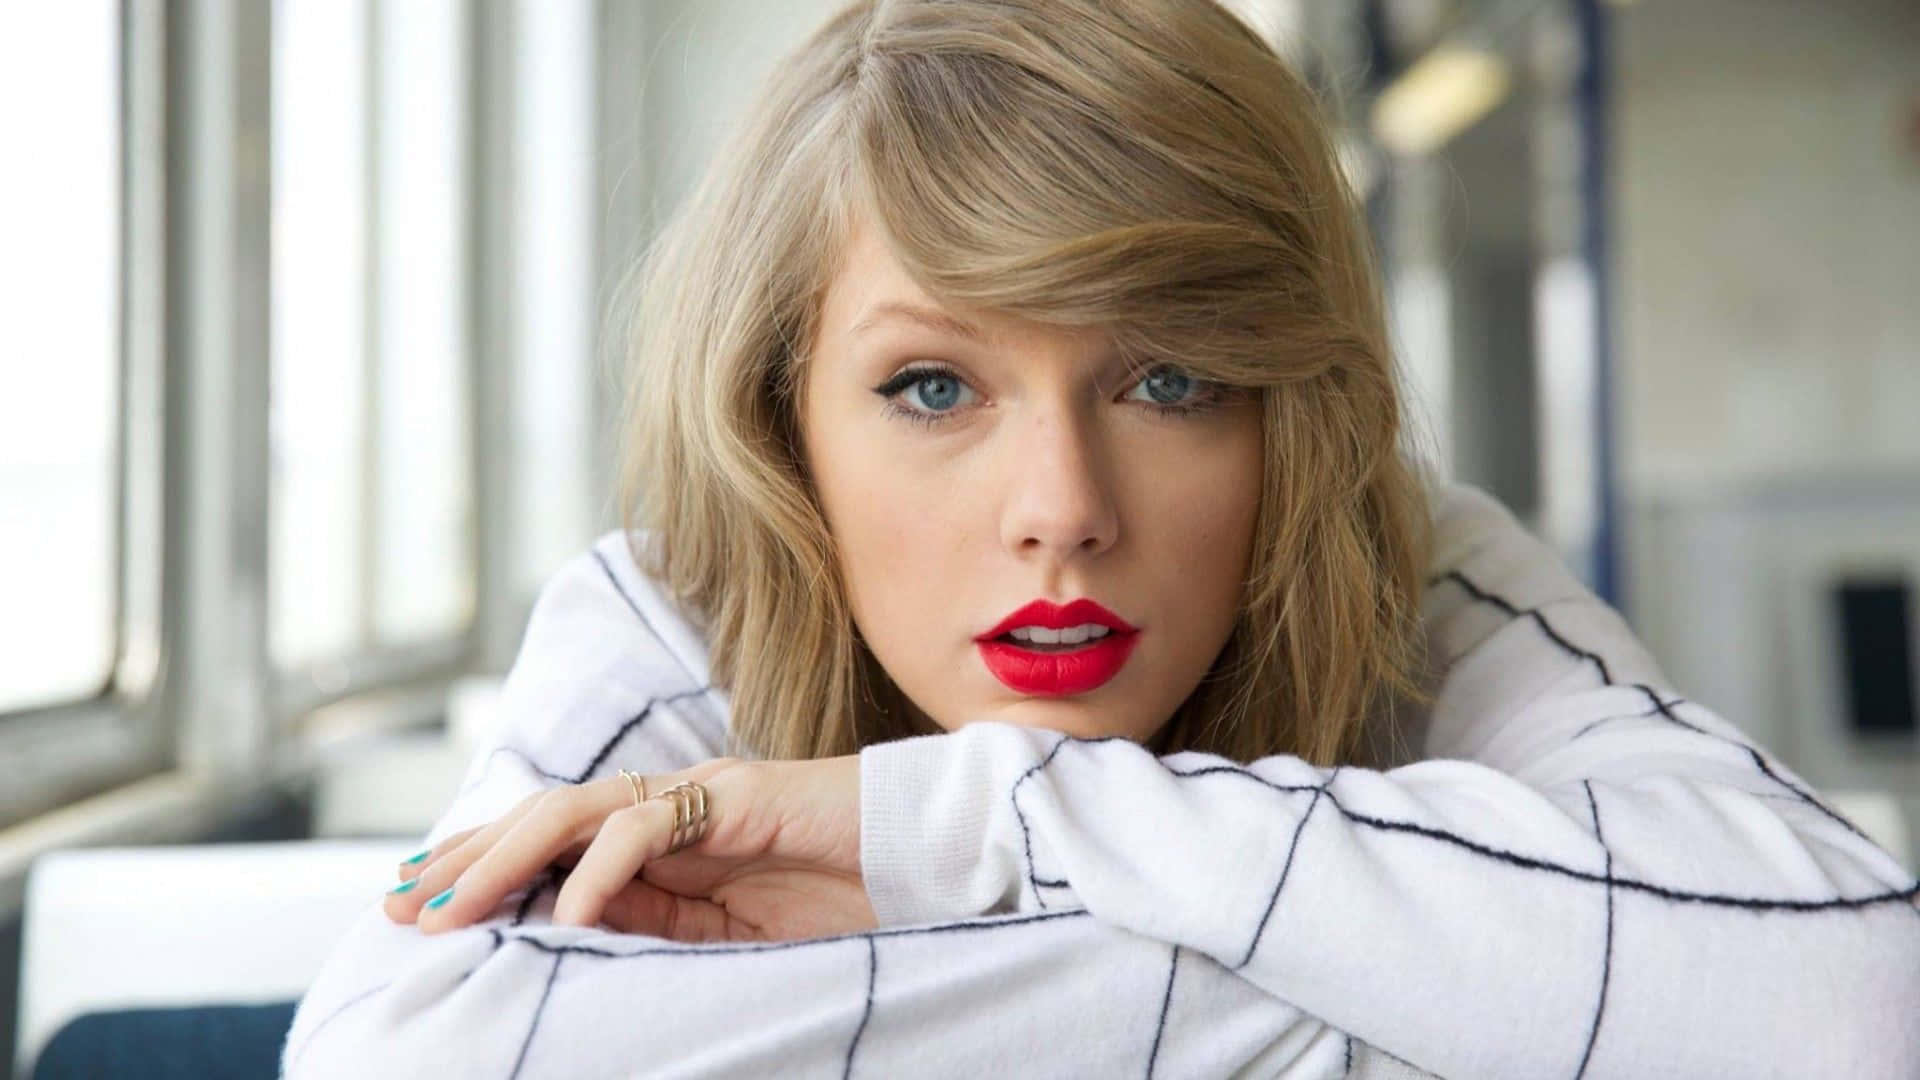 Taylor Swift Red Lip Classic Look Wallpaper